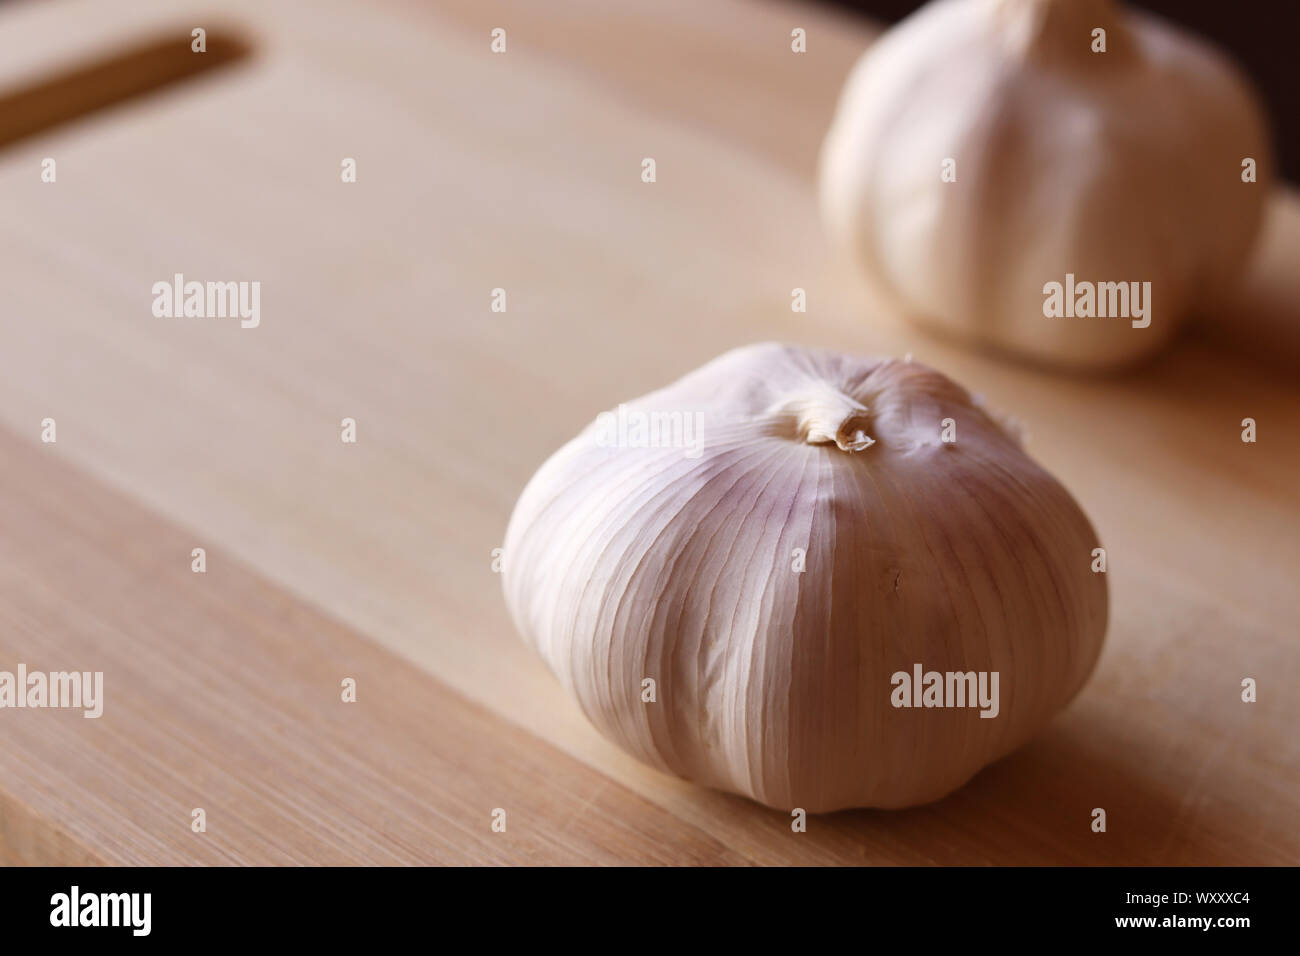 Garlic bulbs on wood cutting board using natural light Stock Photo